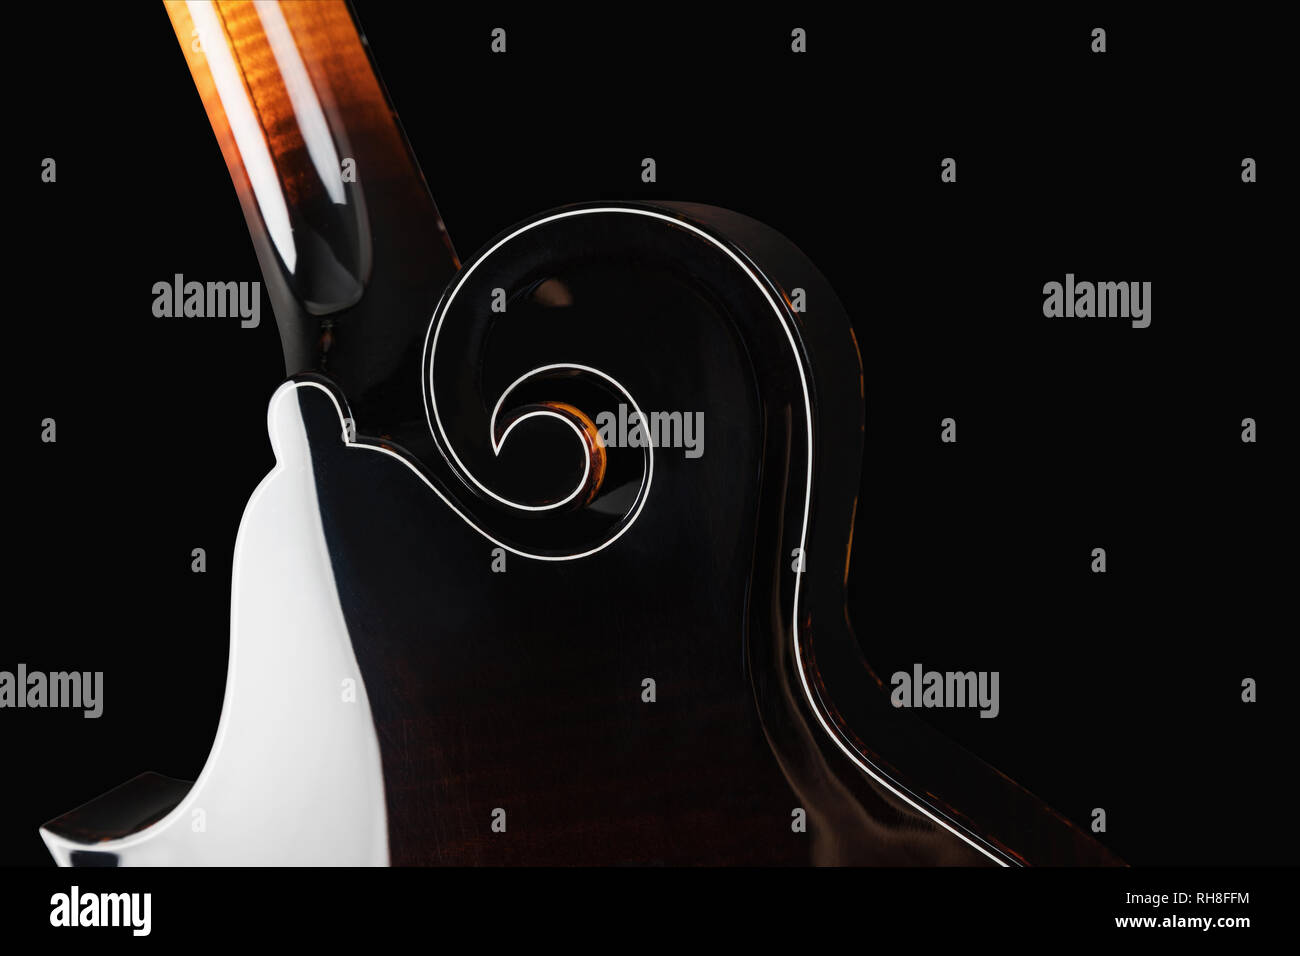 Mandolin isolated on black background. Music concept. Stock Photo